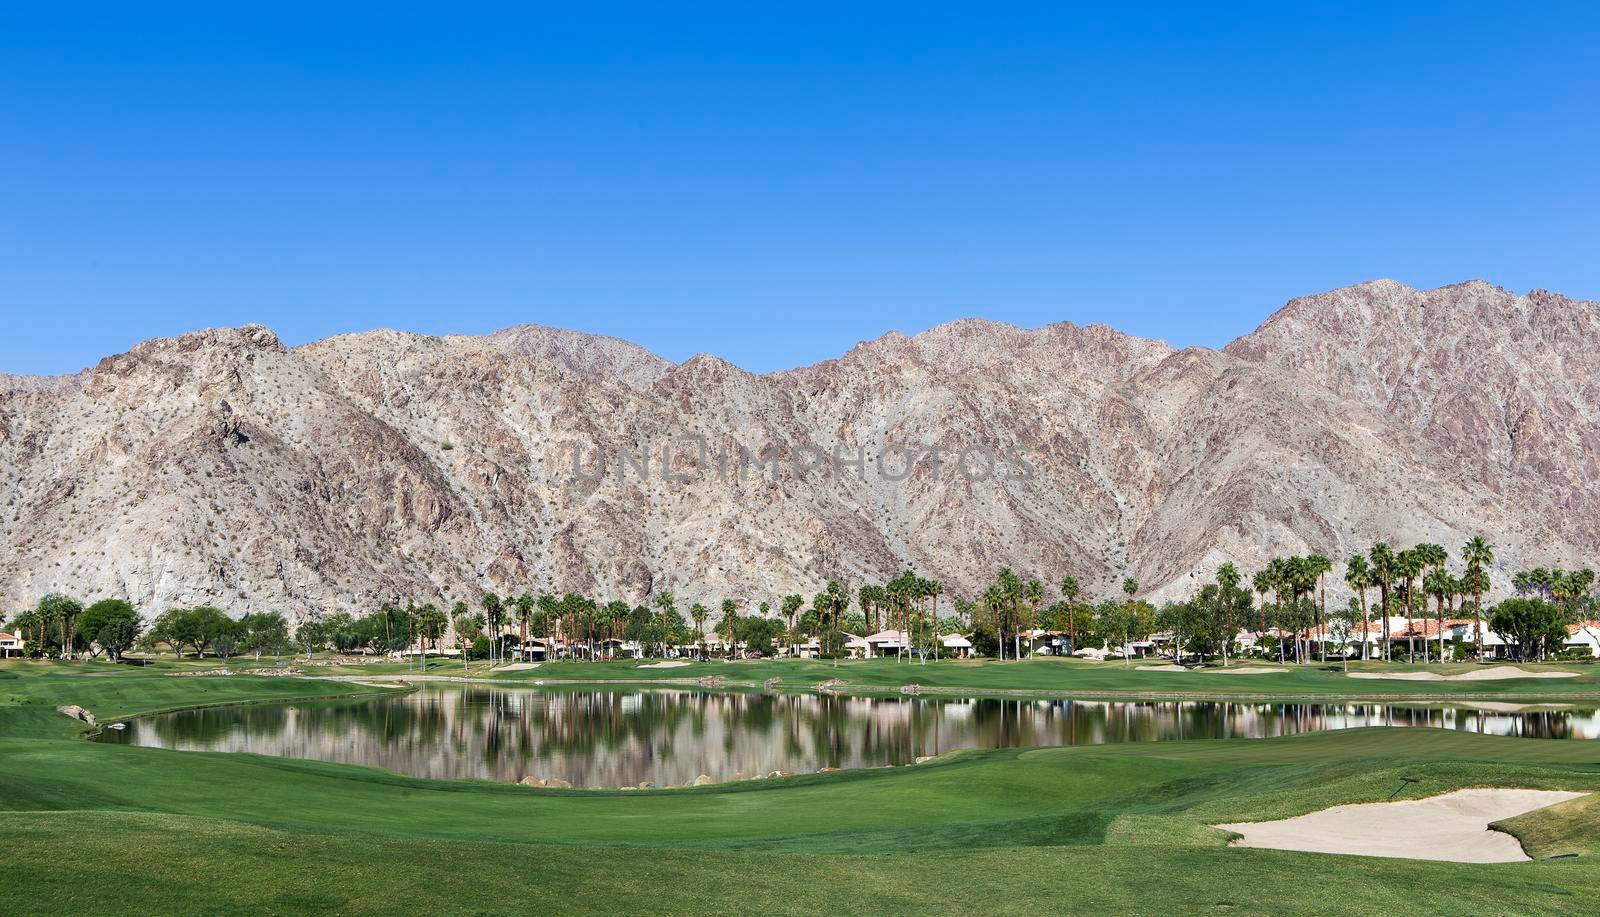 Pga West golf course, Palm Springs, California by photogolfer